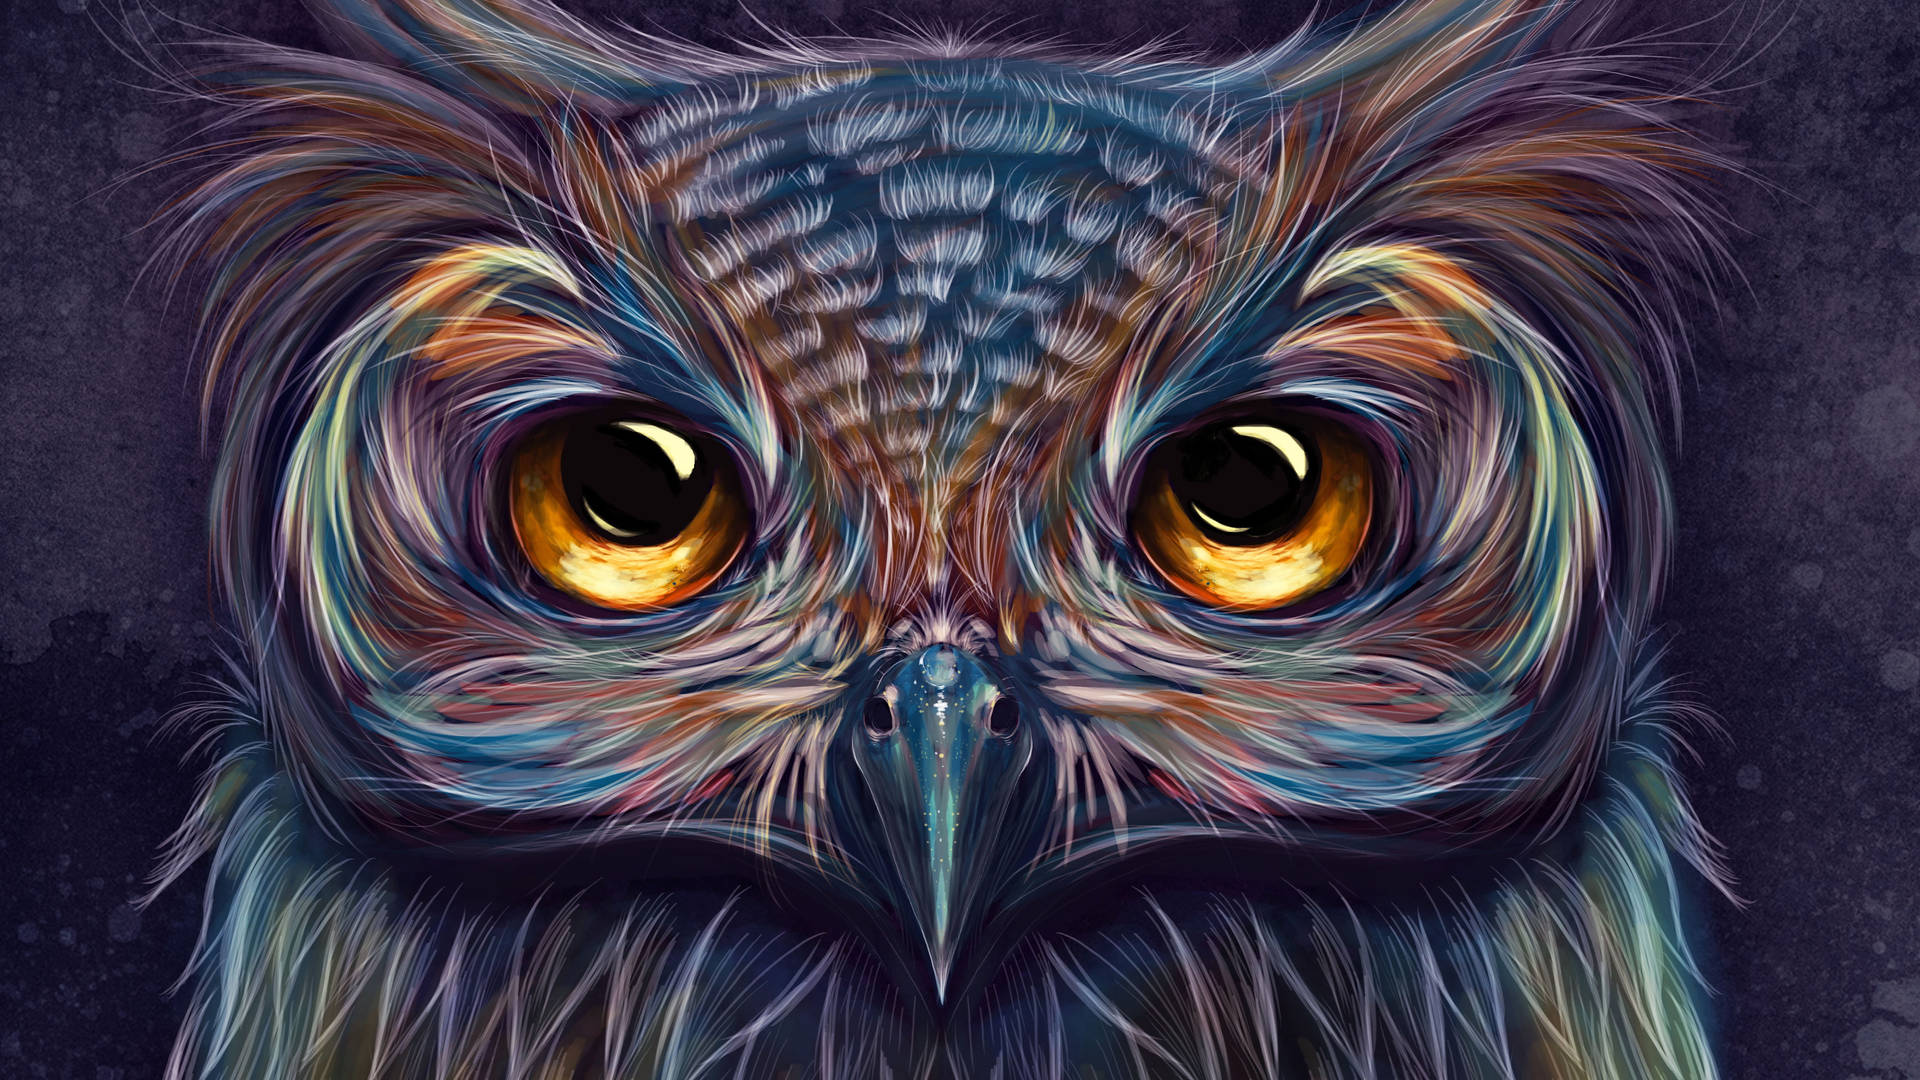 5k Hd Owl Artwork